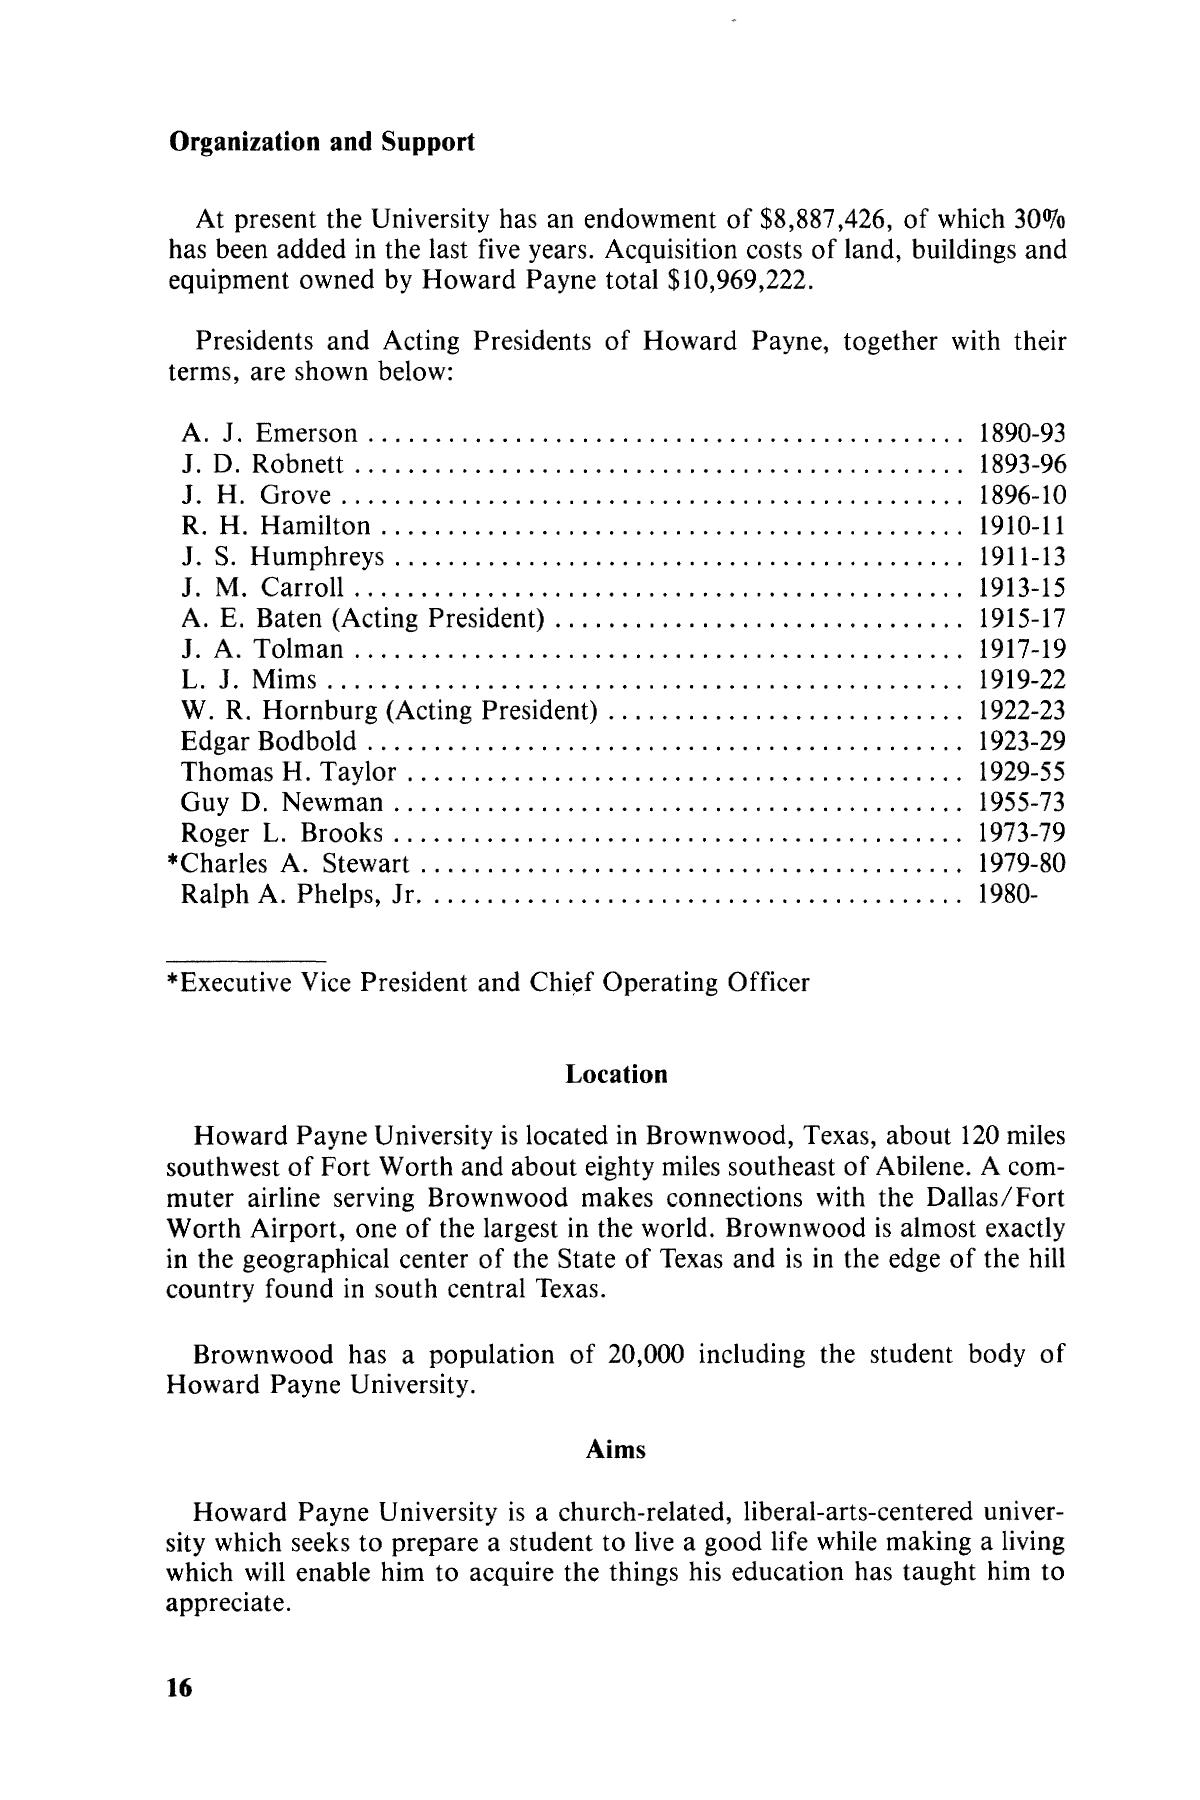 Catalog of Howard Payne University, 1983-1984
                                                
                                                    16
                                                